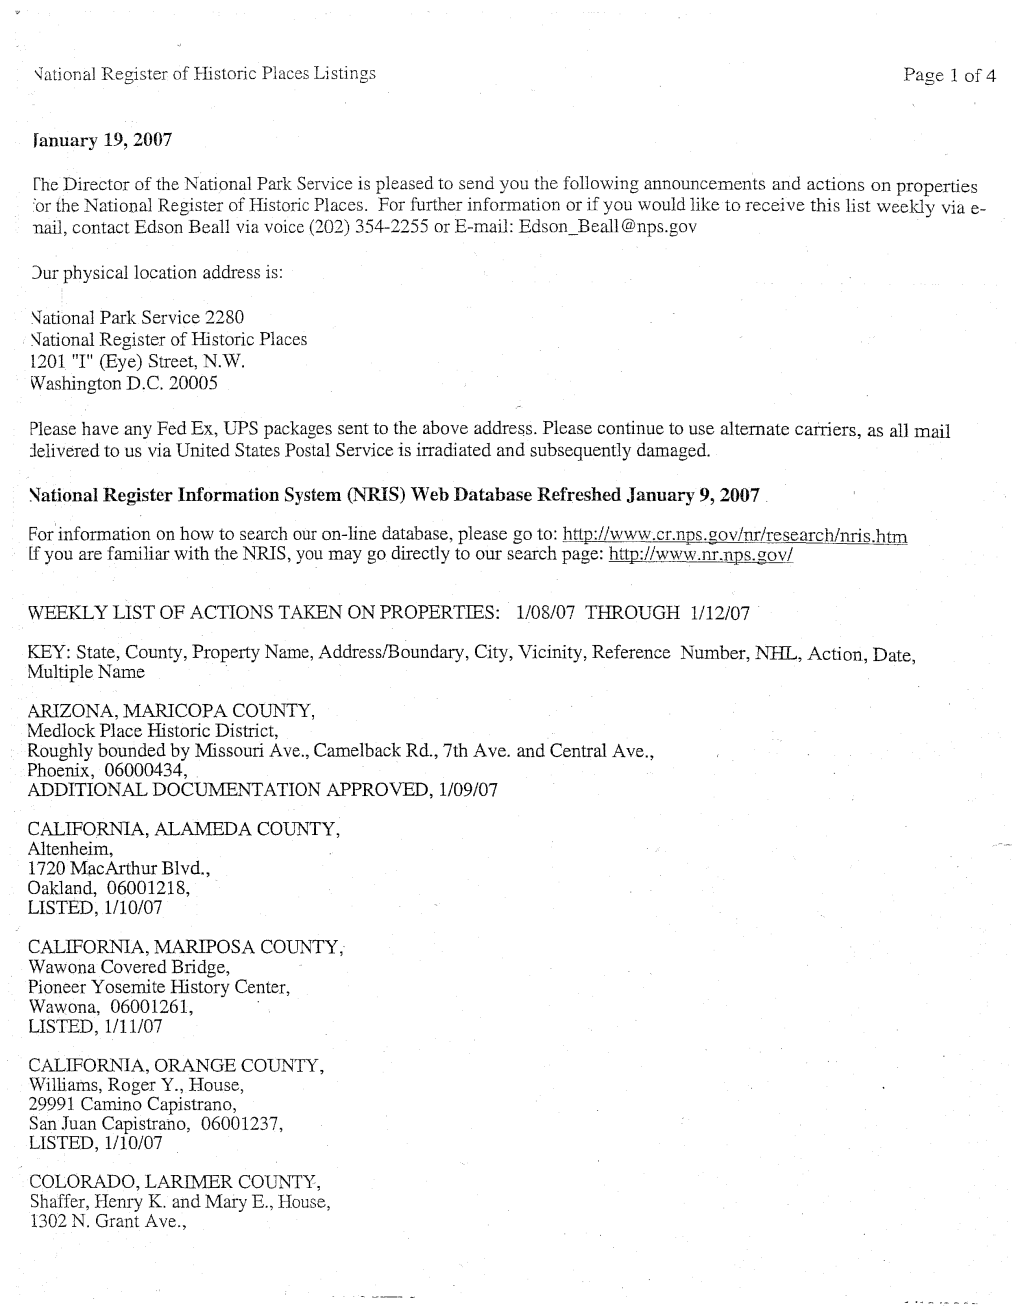 Fanuary 19, 2007 ~Ational Register Information System (NRIS) Web Database Refreshed January 9, 2007